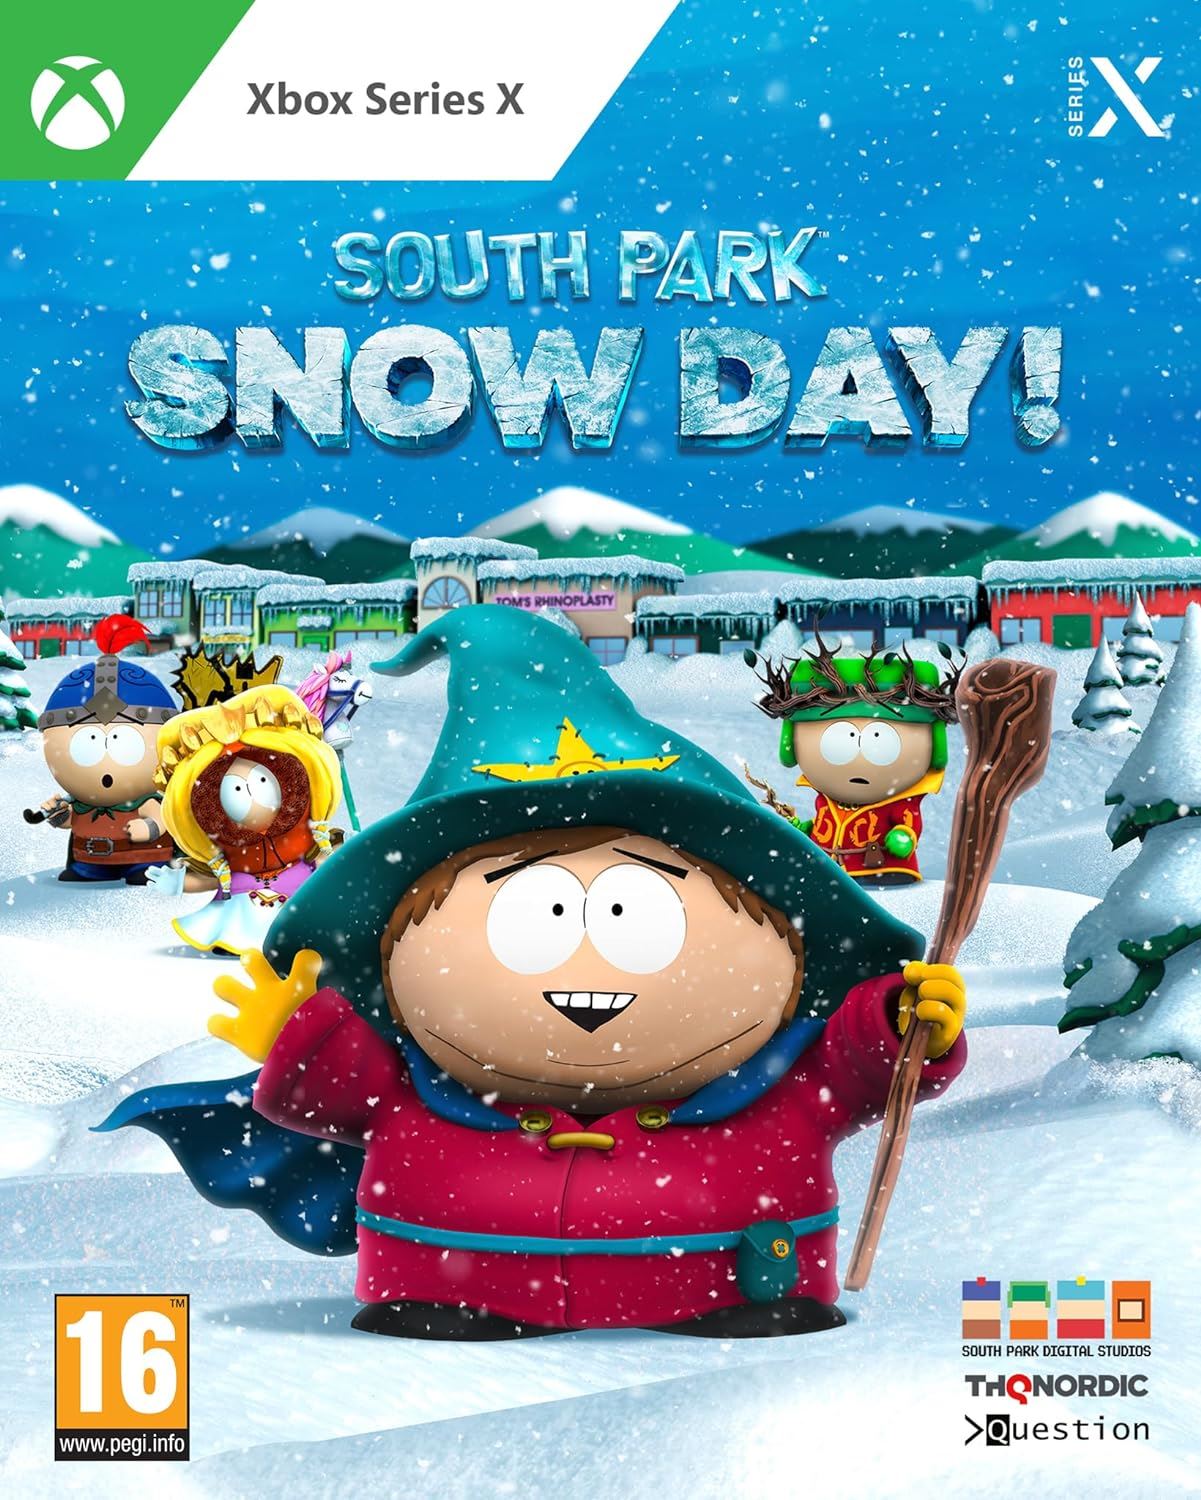 SOUTH PARK - SNOW DAY! Xbox Series X